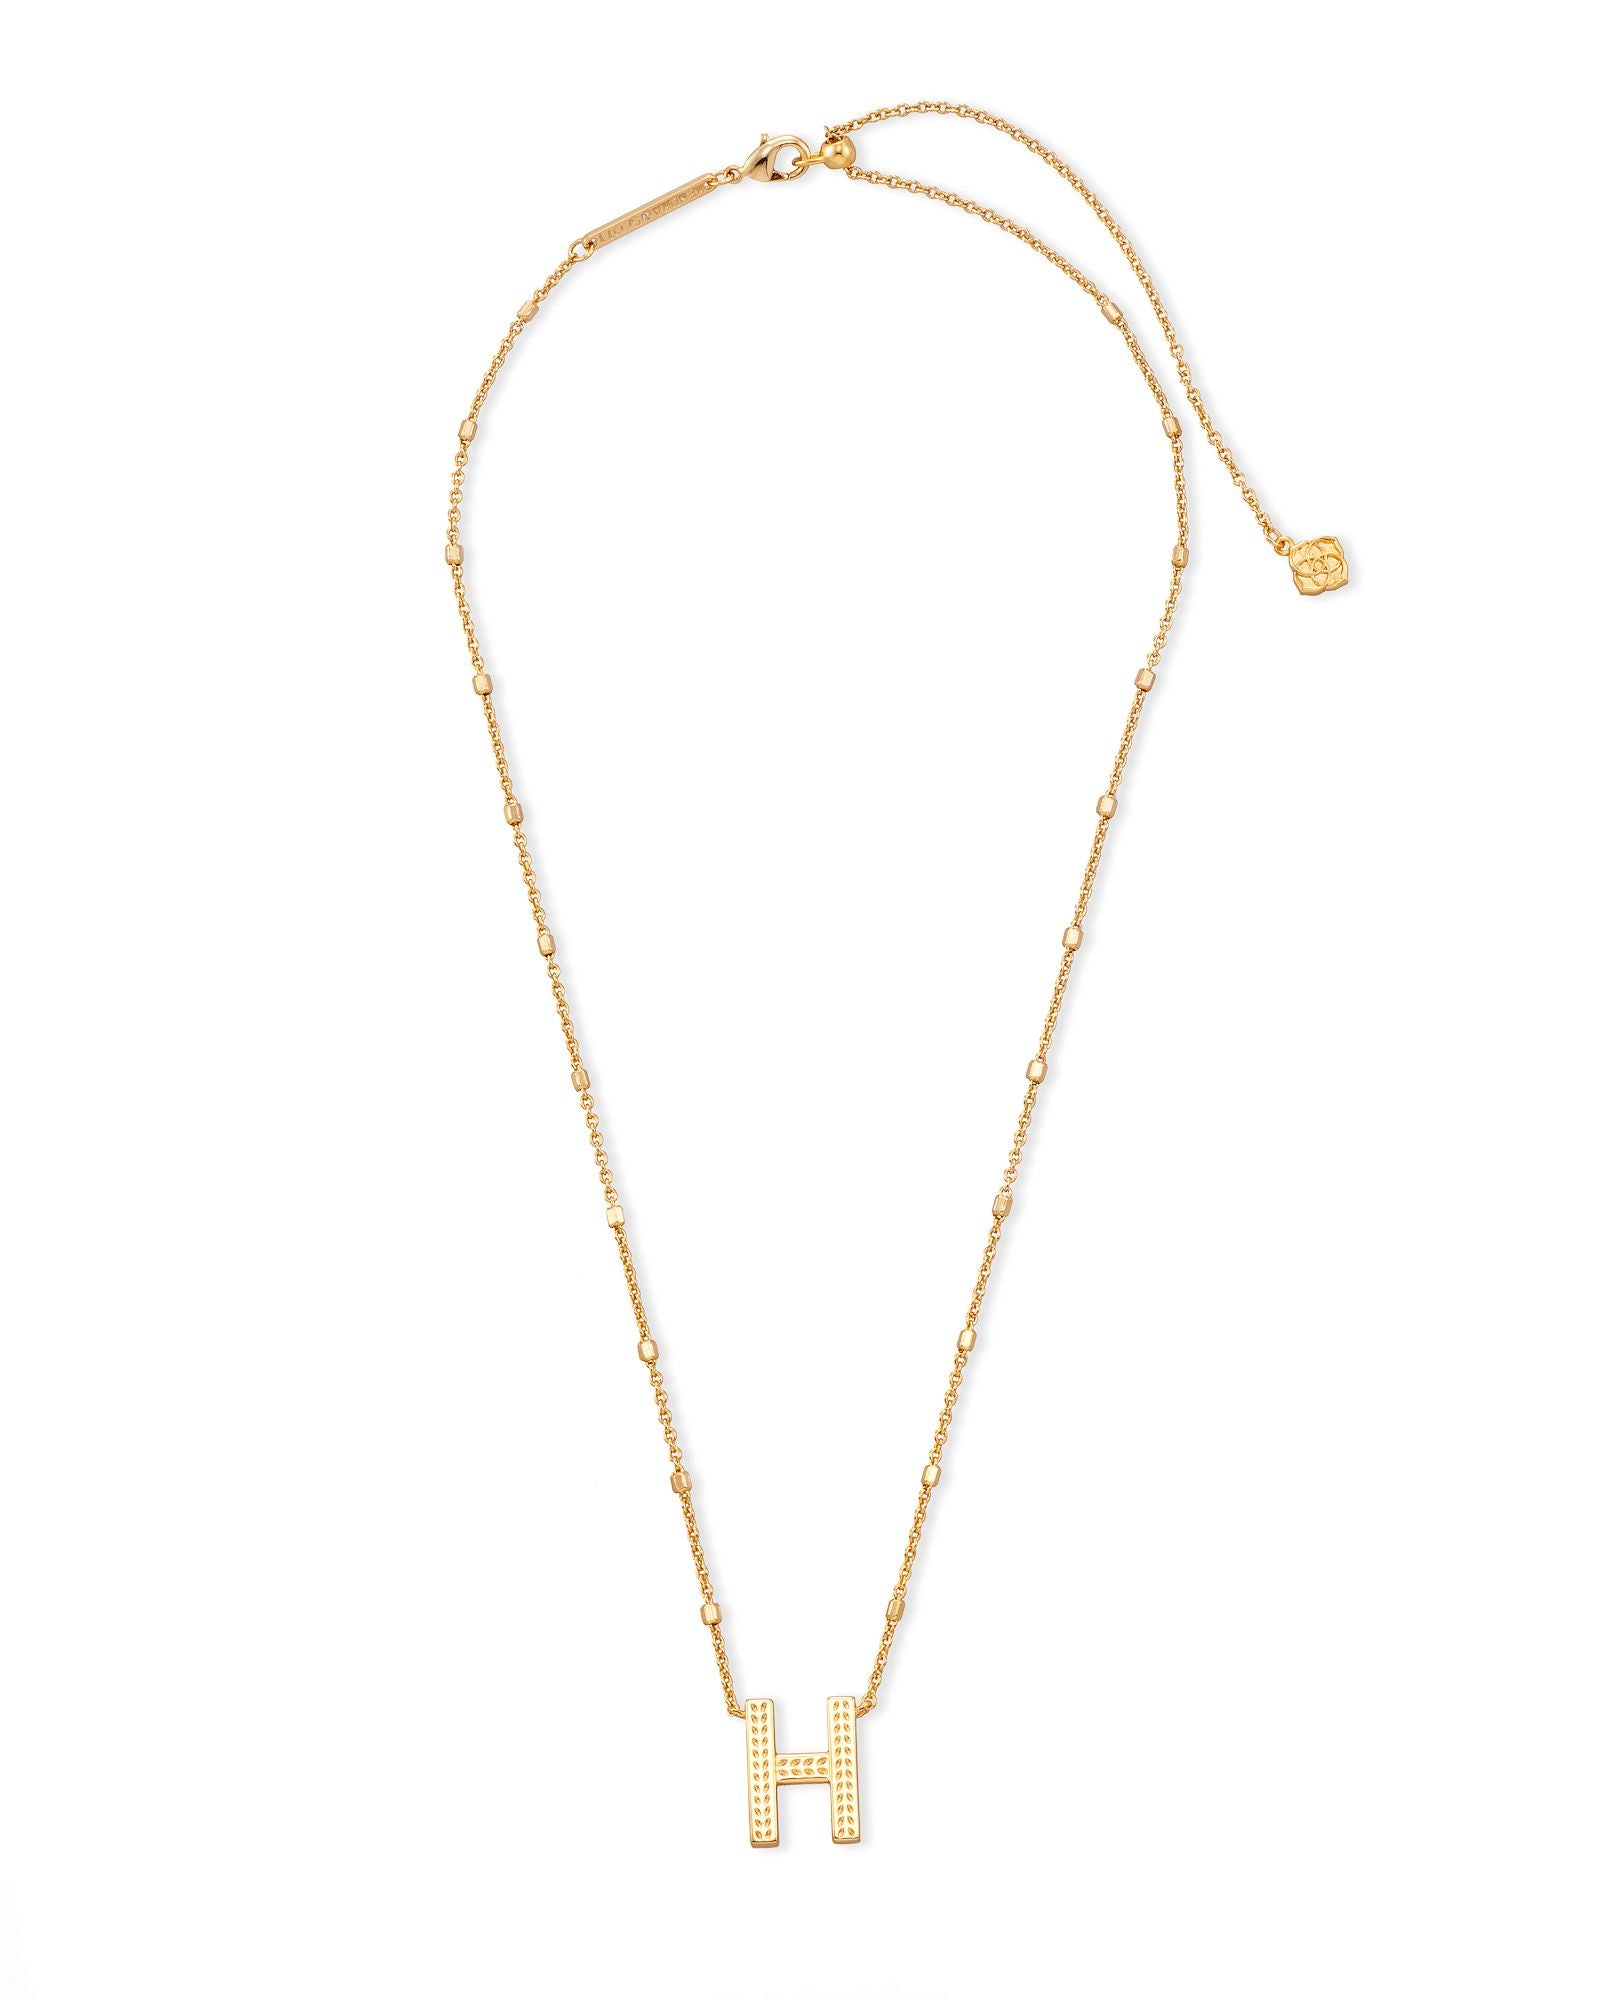 Kendra Scott Letter H Pendant Necklace Gold Metal-Necklaces-Kendra Scott-N1722GLD-H-The Twisted Chandelier